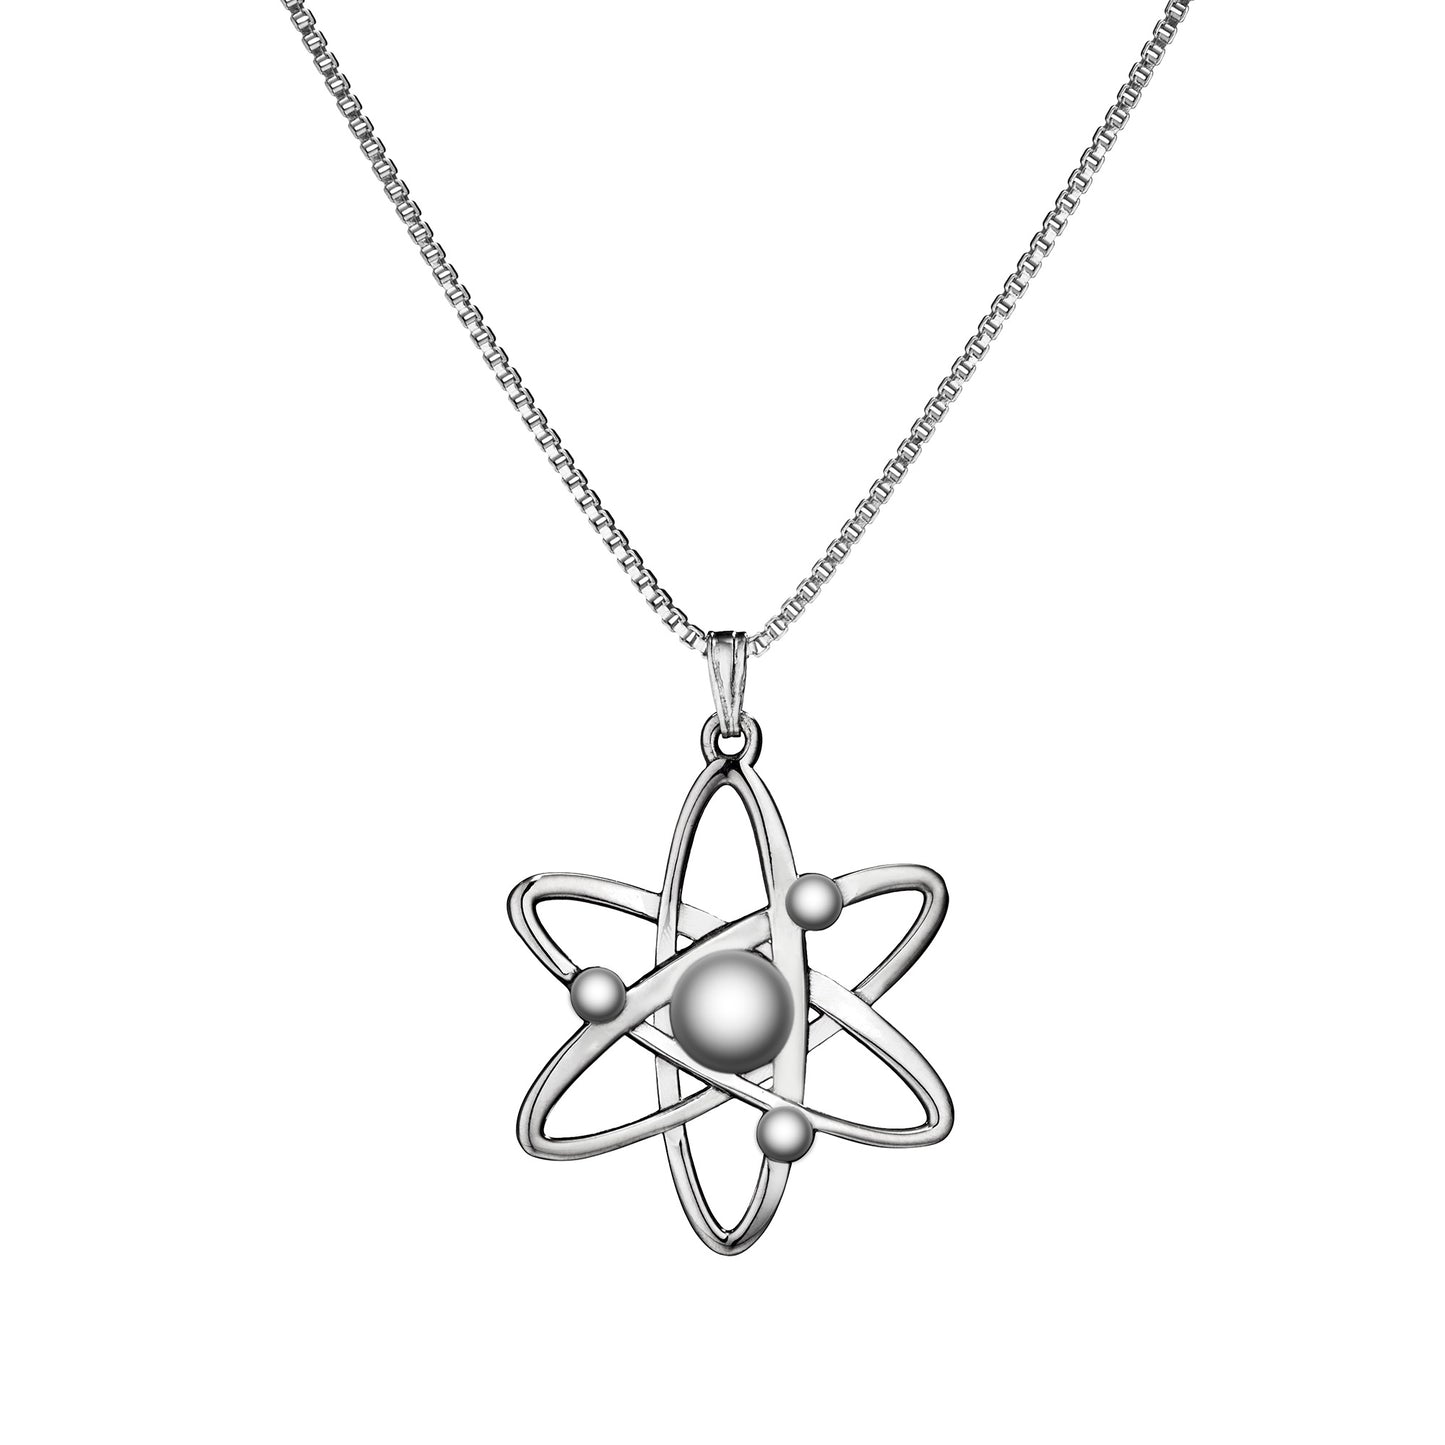 Atom necklace